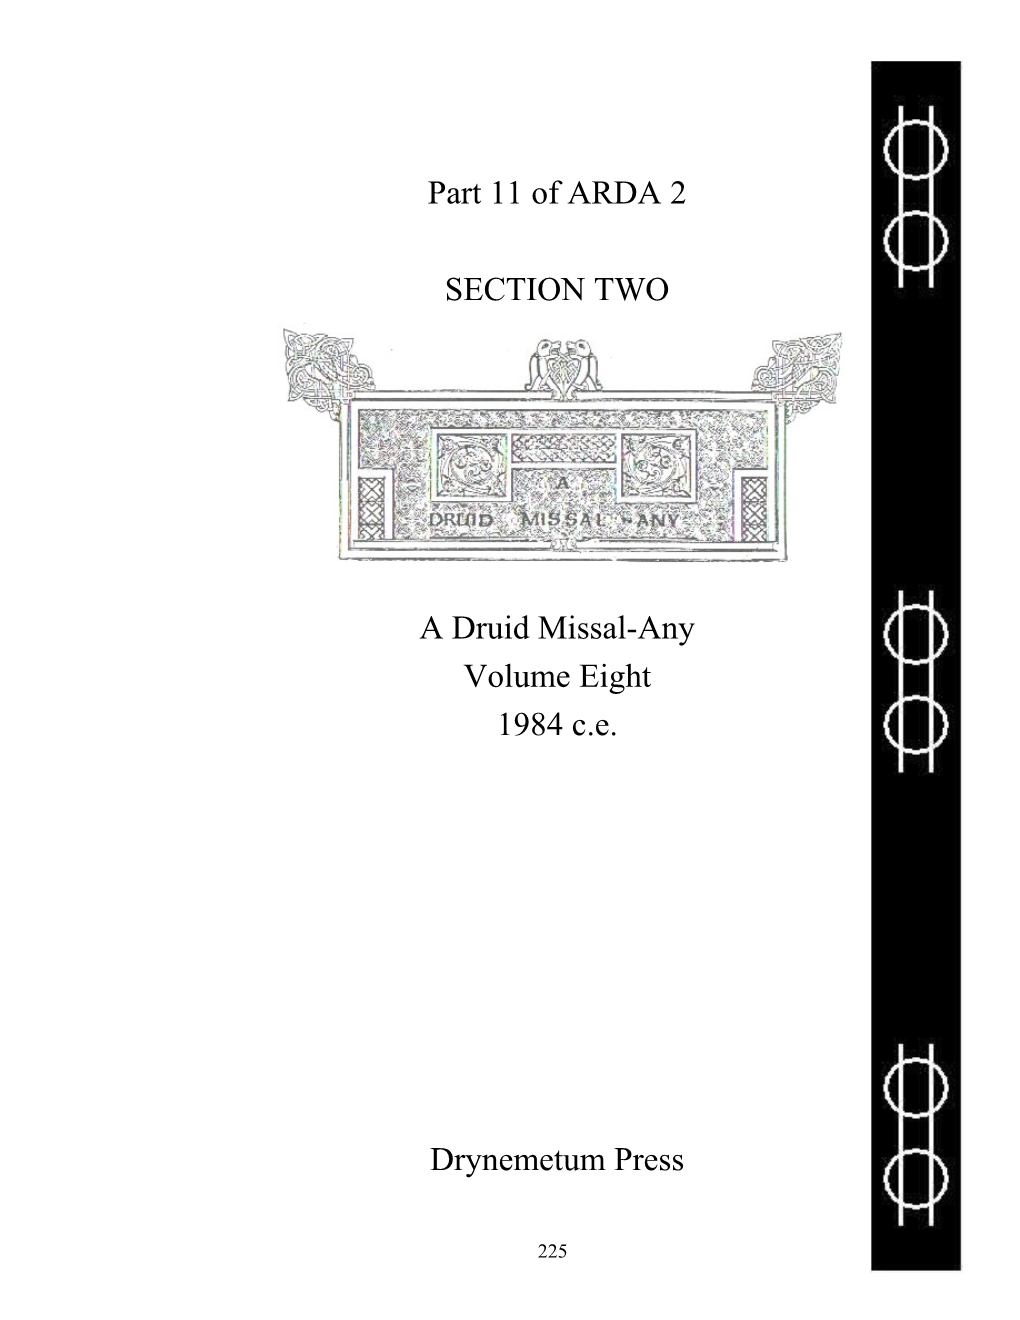 A Druid Missal-Any